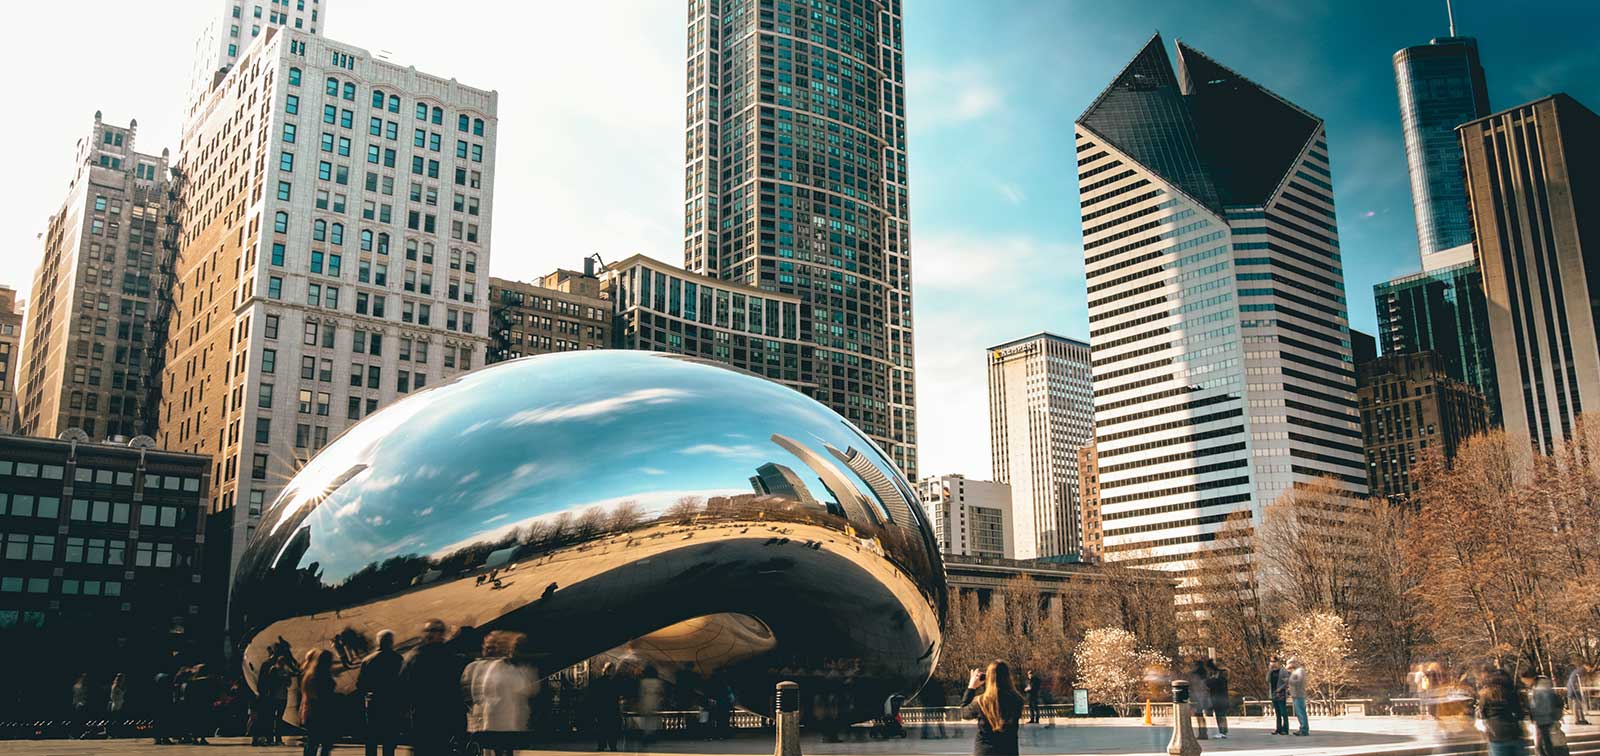 Bean sculpture in Chicago, Illinois